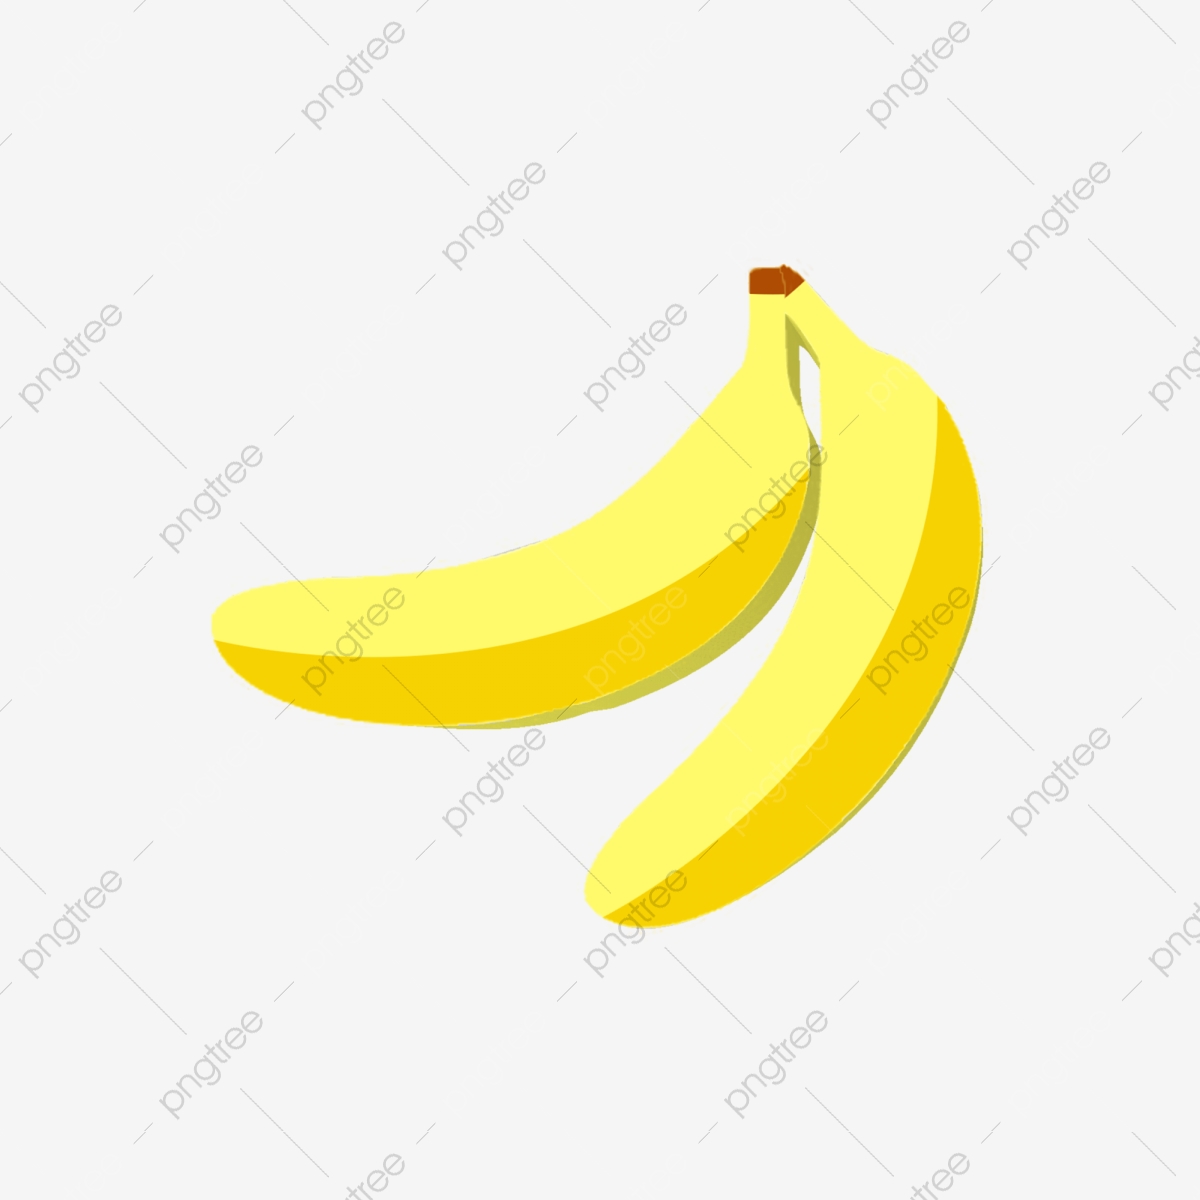 banana clipart simple